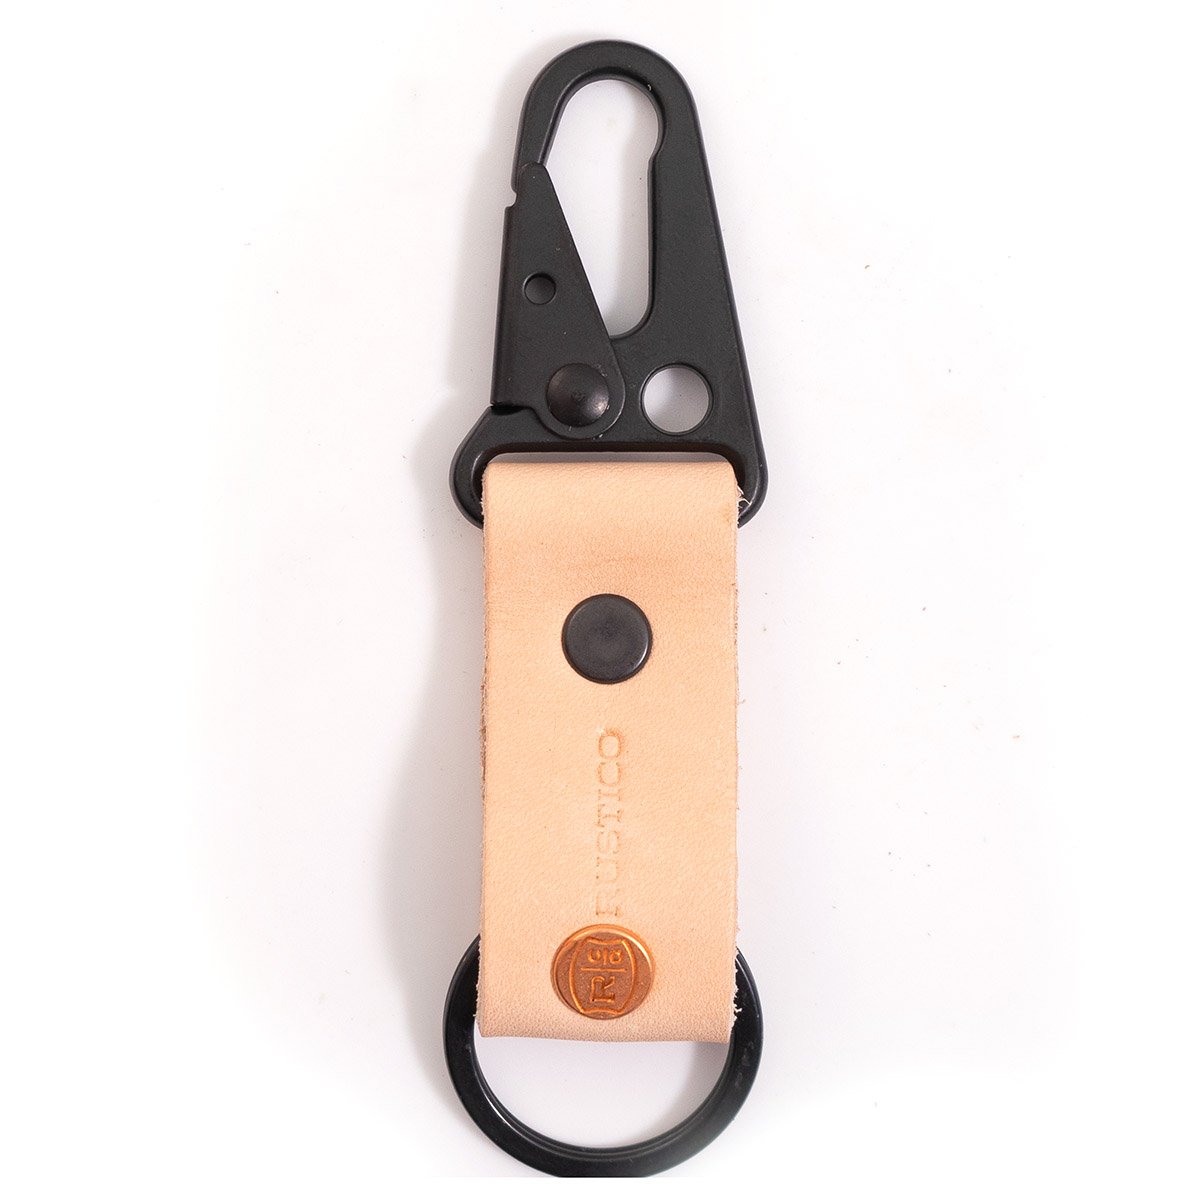 Rustico Clip Leather Keychain Black